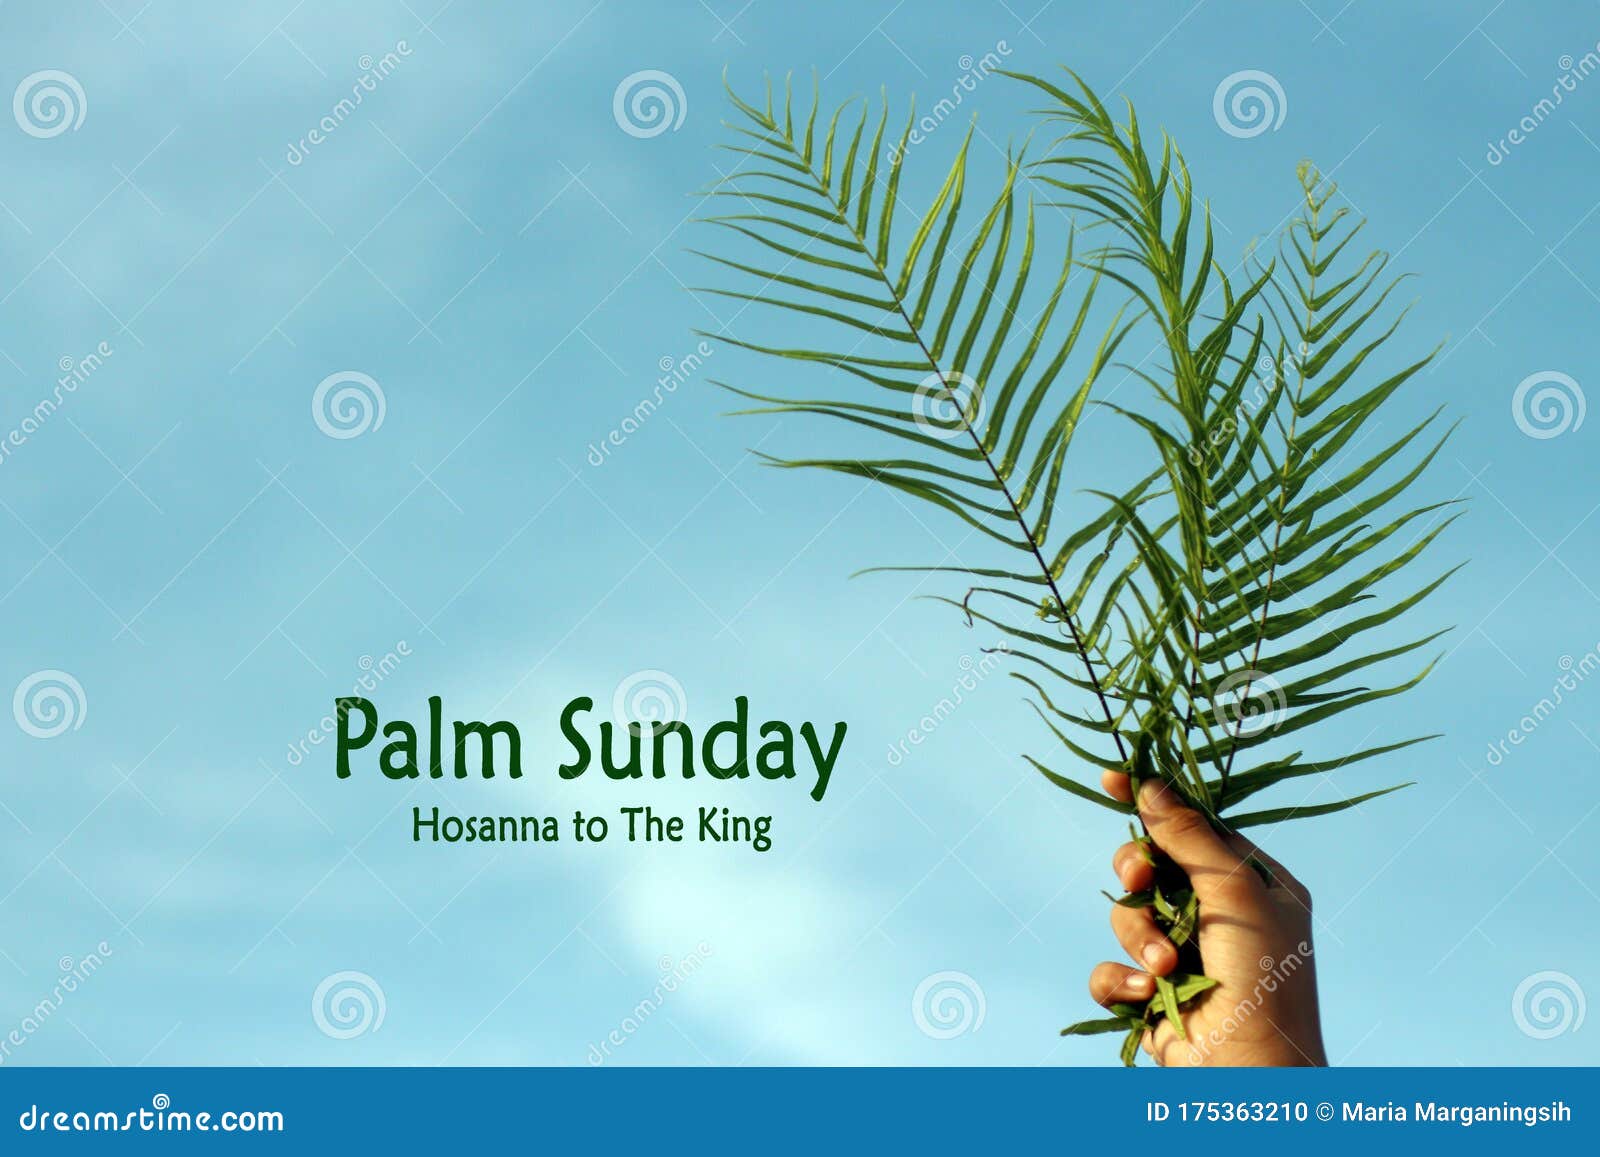 189 Palm Sunday Backgrounds Stock Photos - Free & Royalty-Free ...